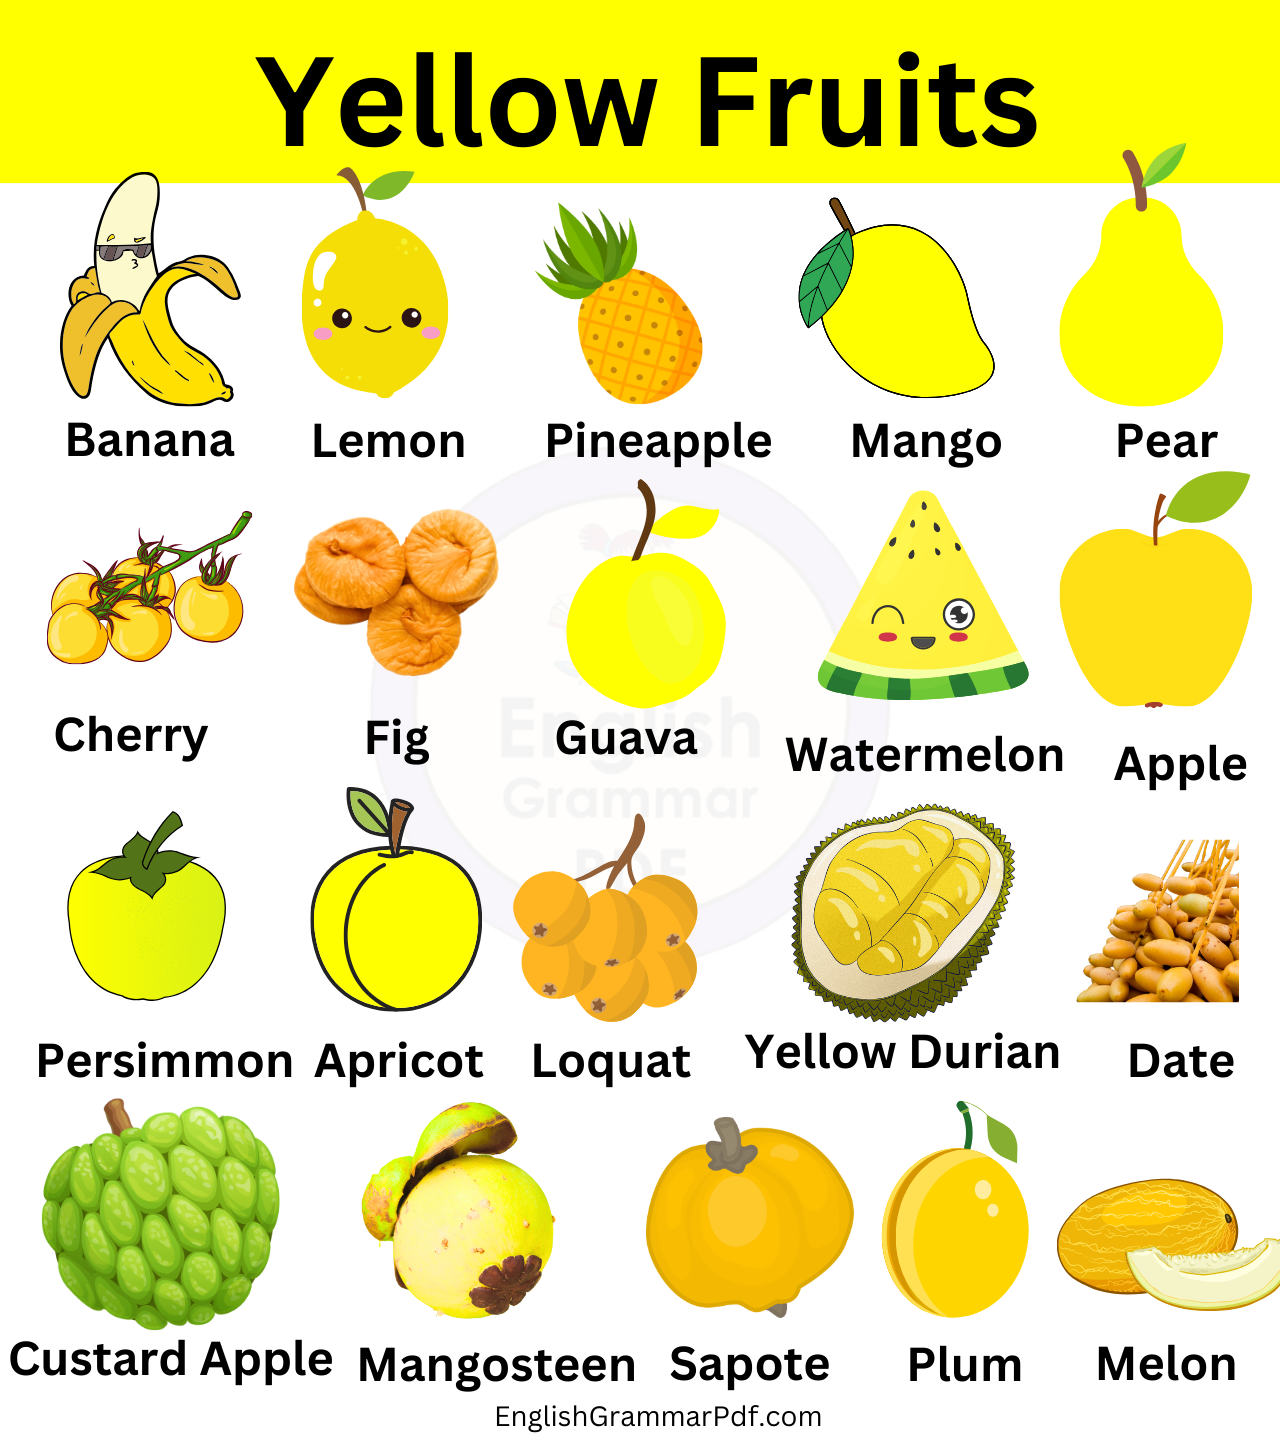 Yellow Fruits names